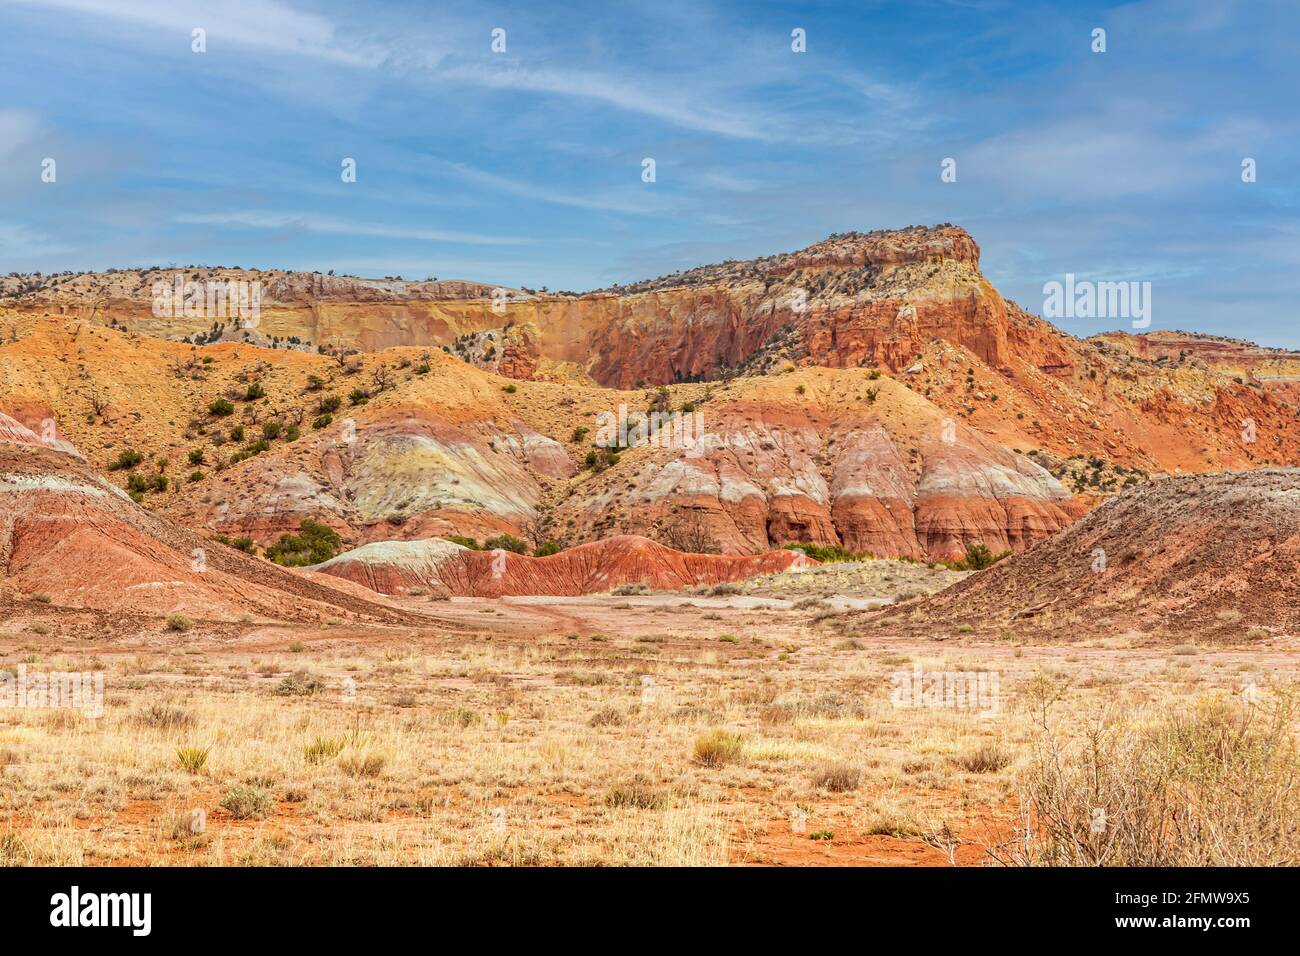 Farbenfrohe, gestreifte Sandsteinfelsen bei Abiquiu, New Mexico., USA. Stockfoto